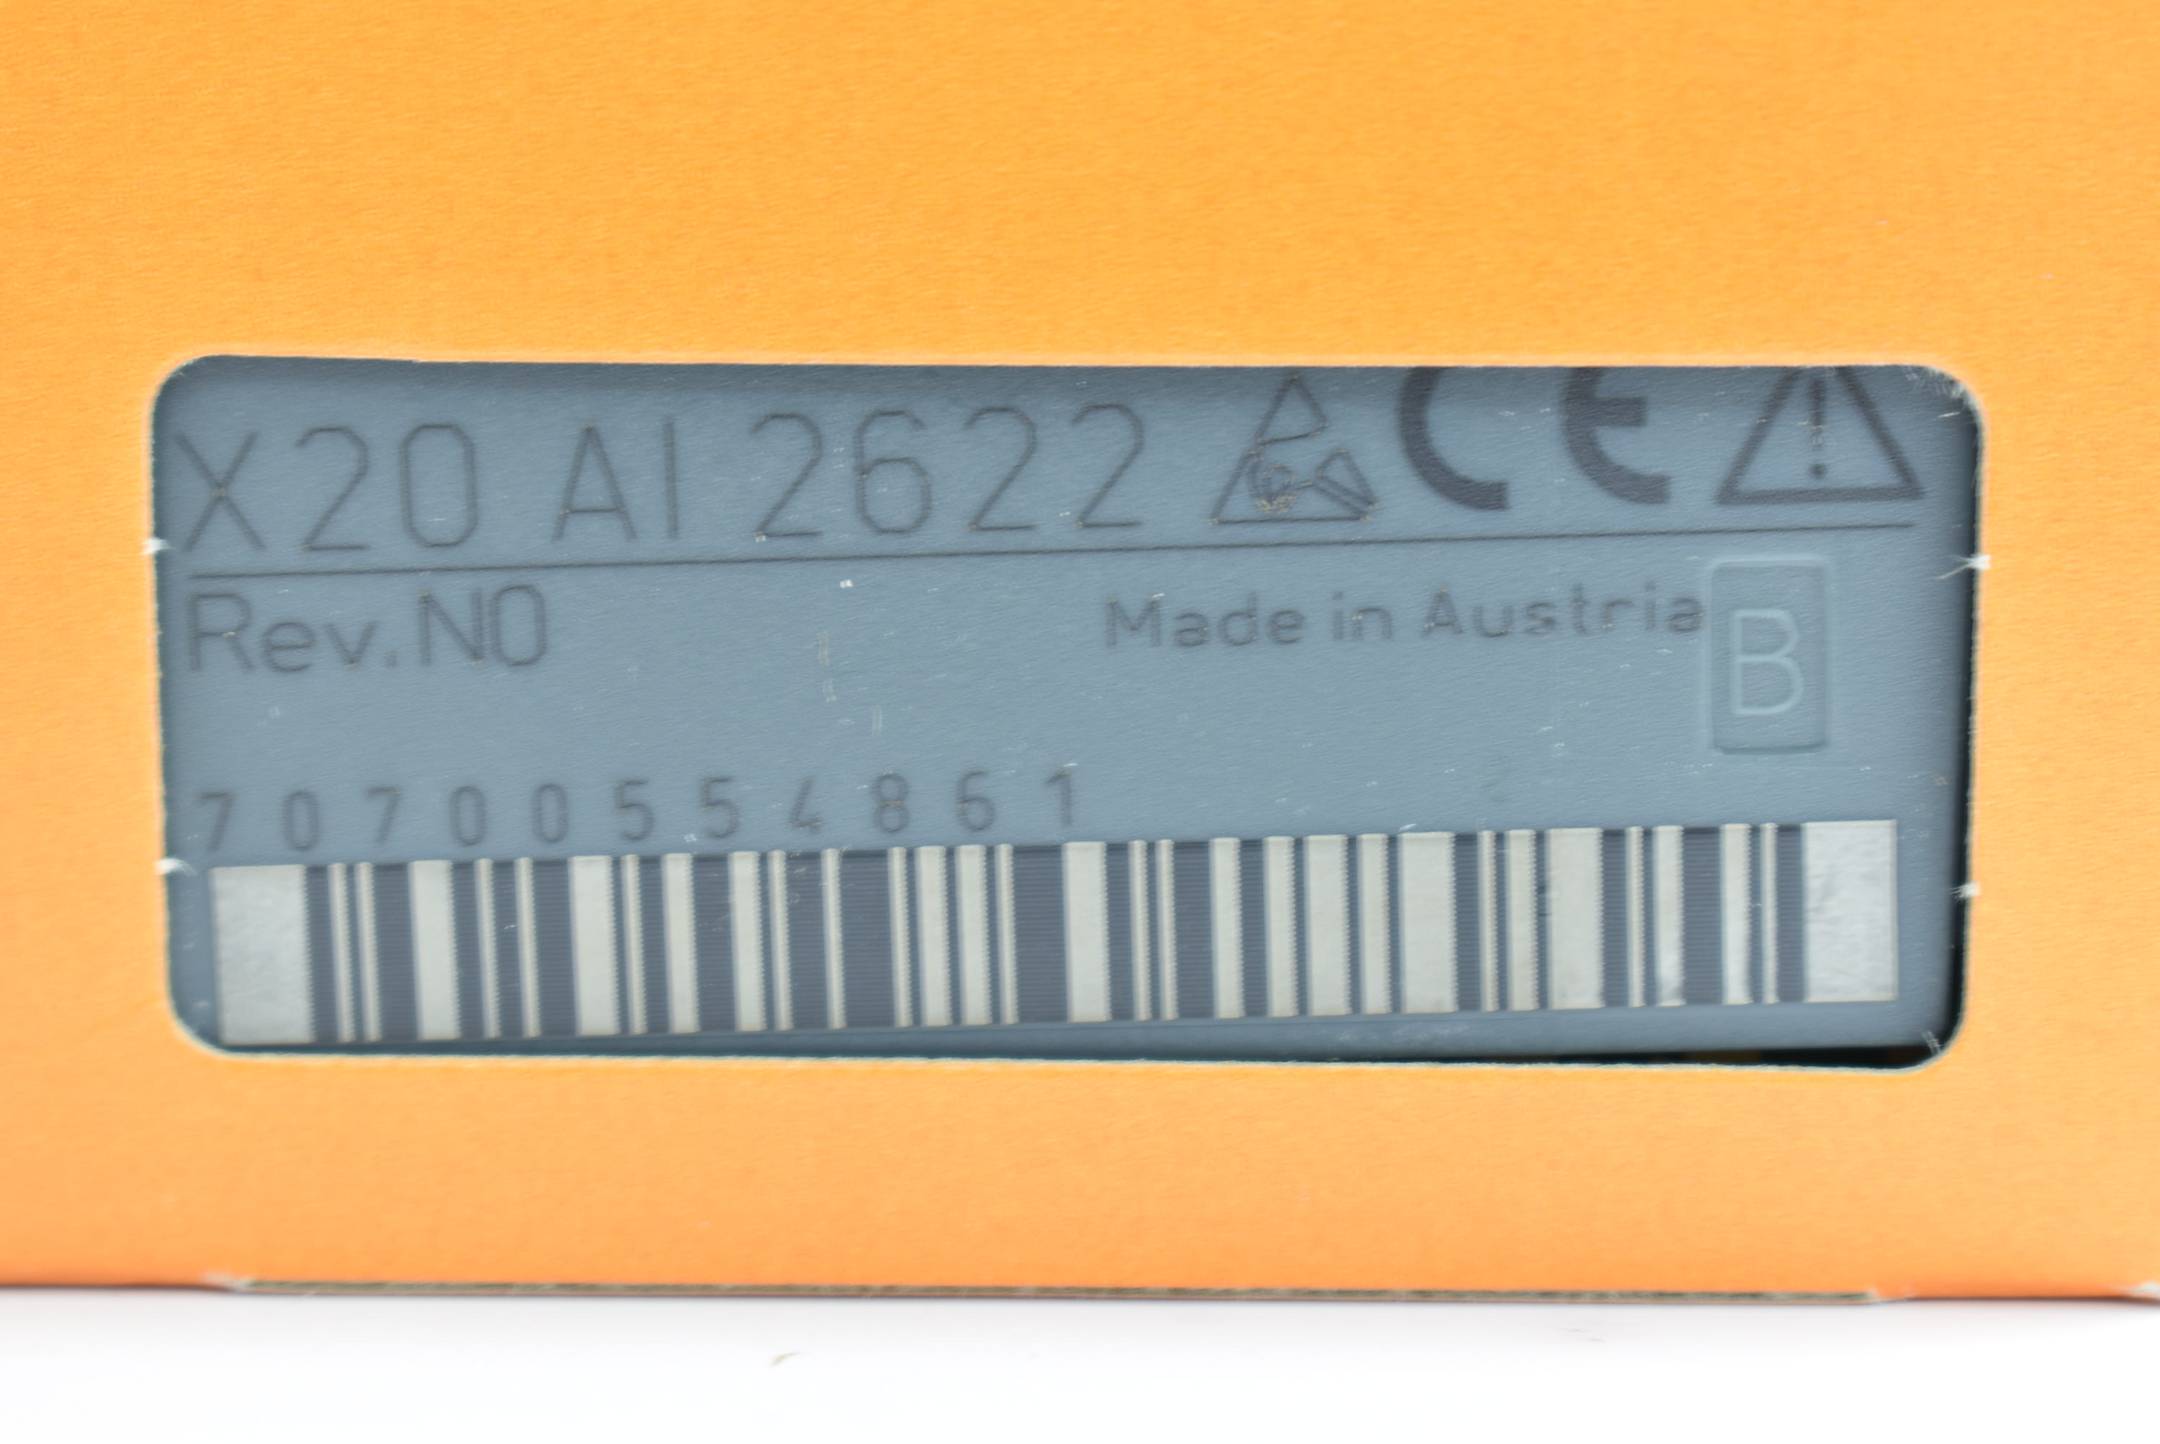 B&R automation analoges Eingangsmodul X20 AI 2622 ( X20AI2622 ) Rev. N0